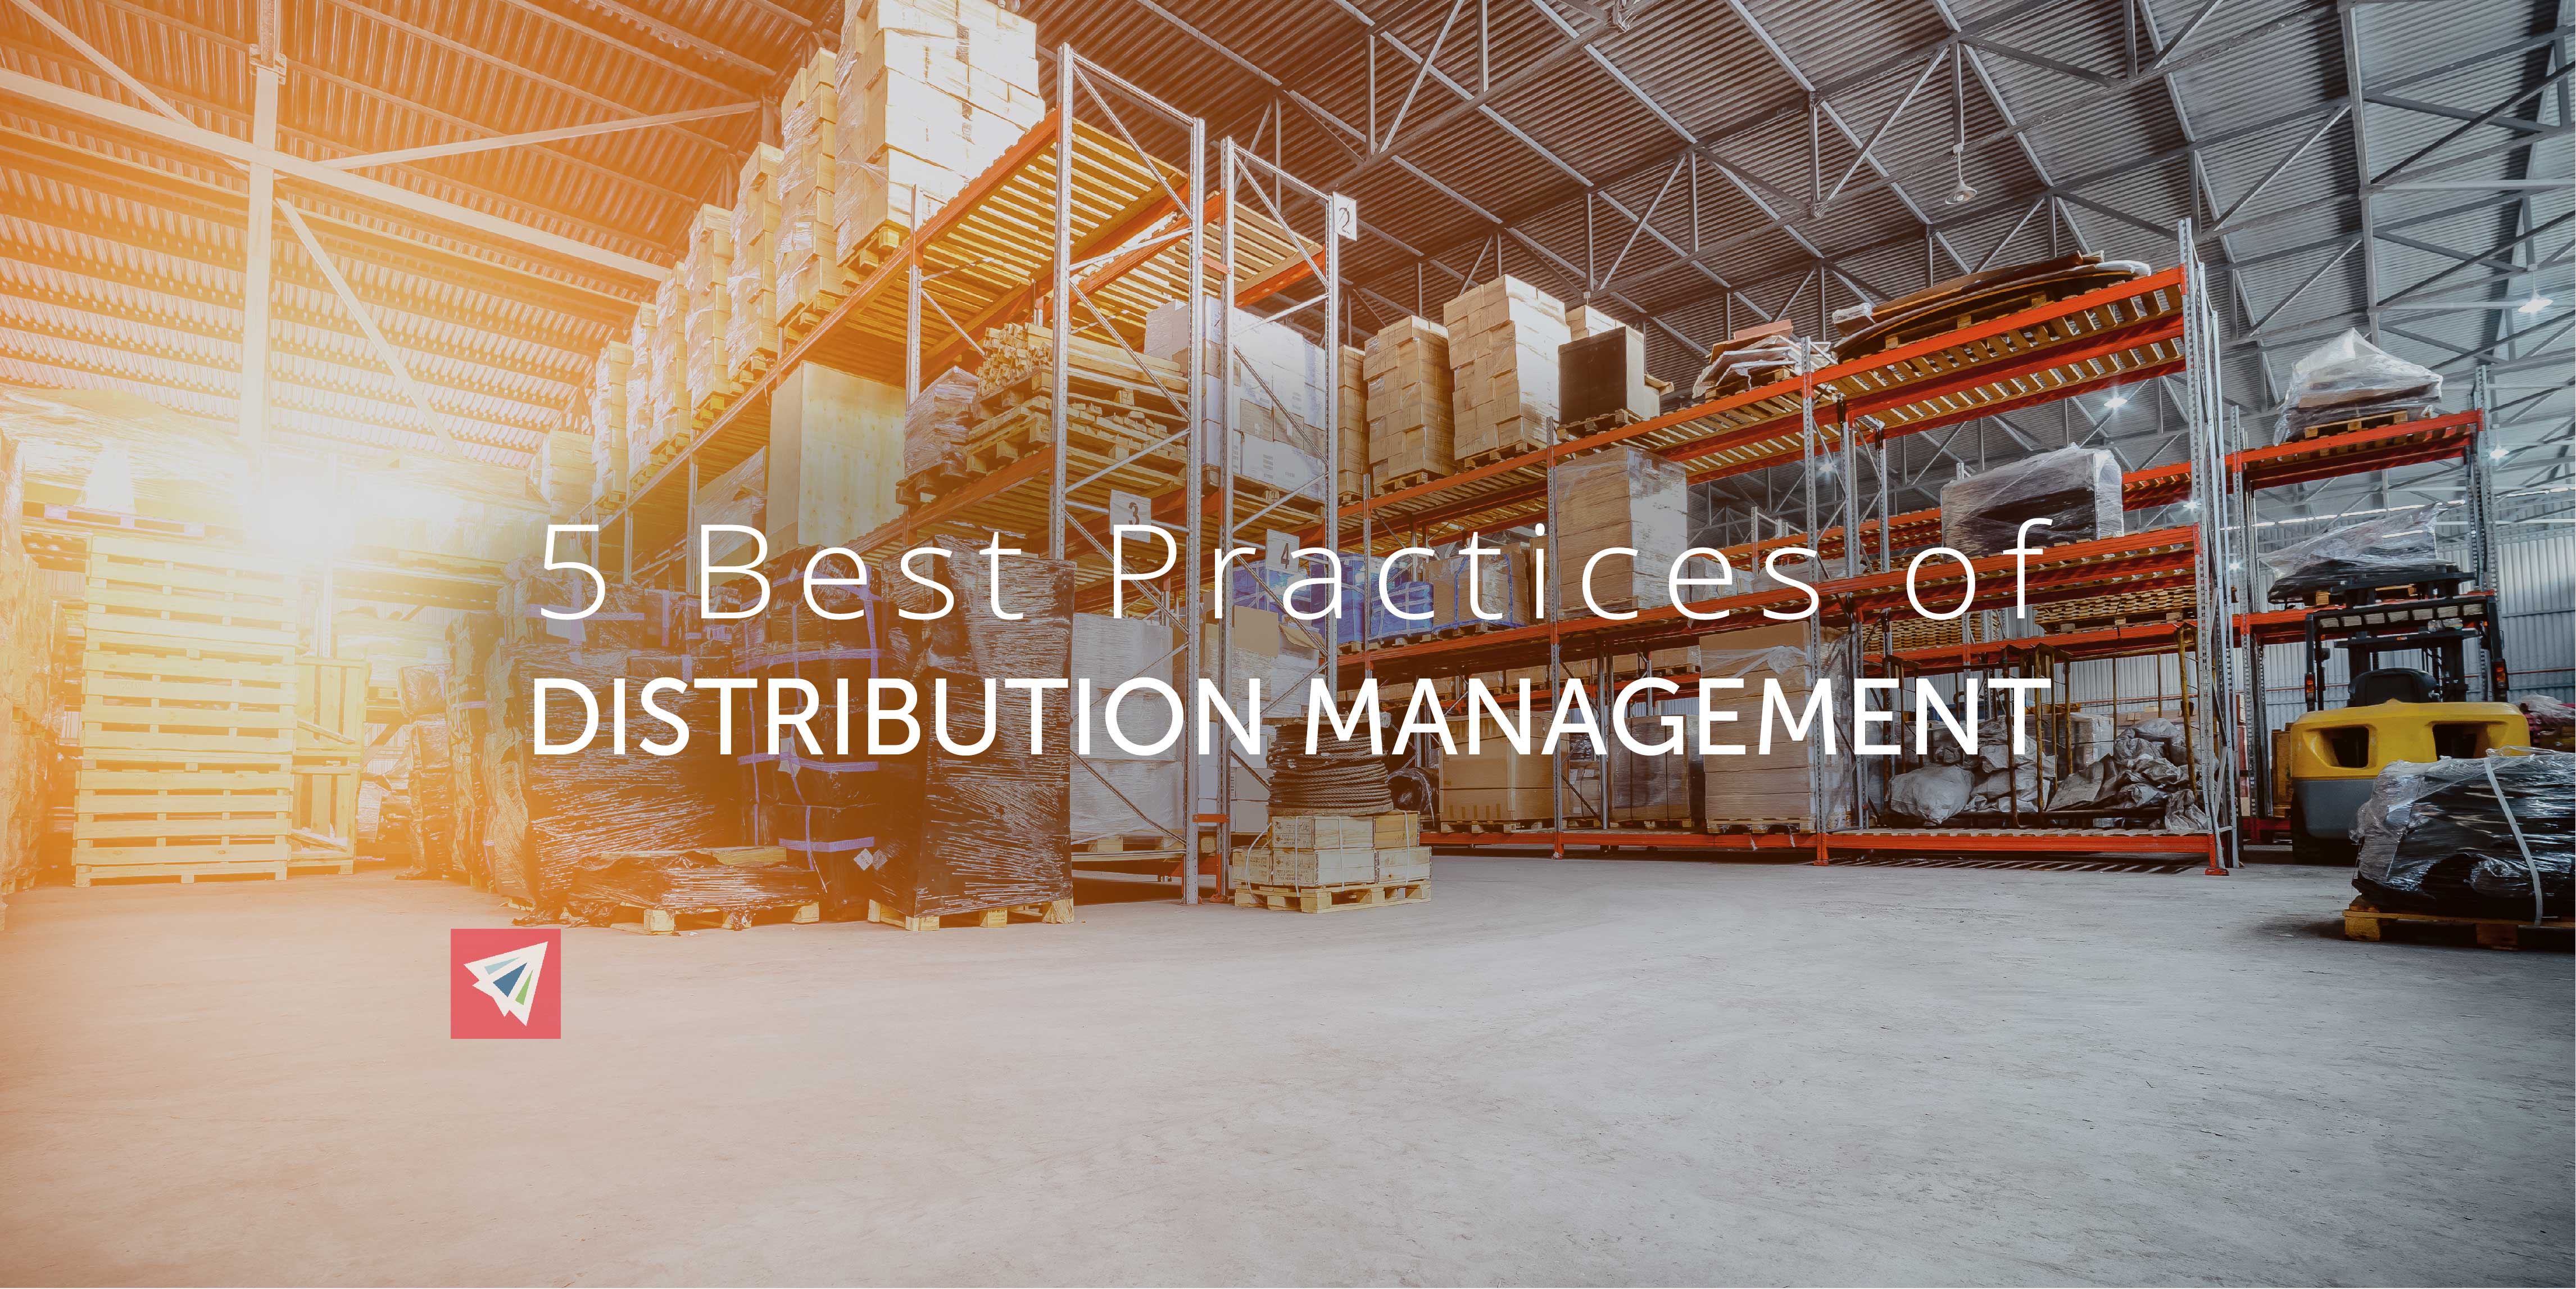 5 Best Practices of Distribution Management